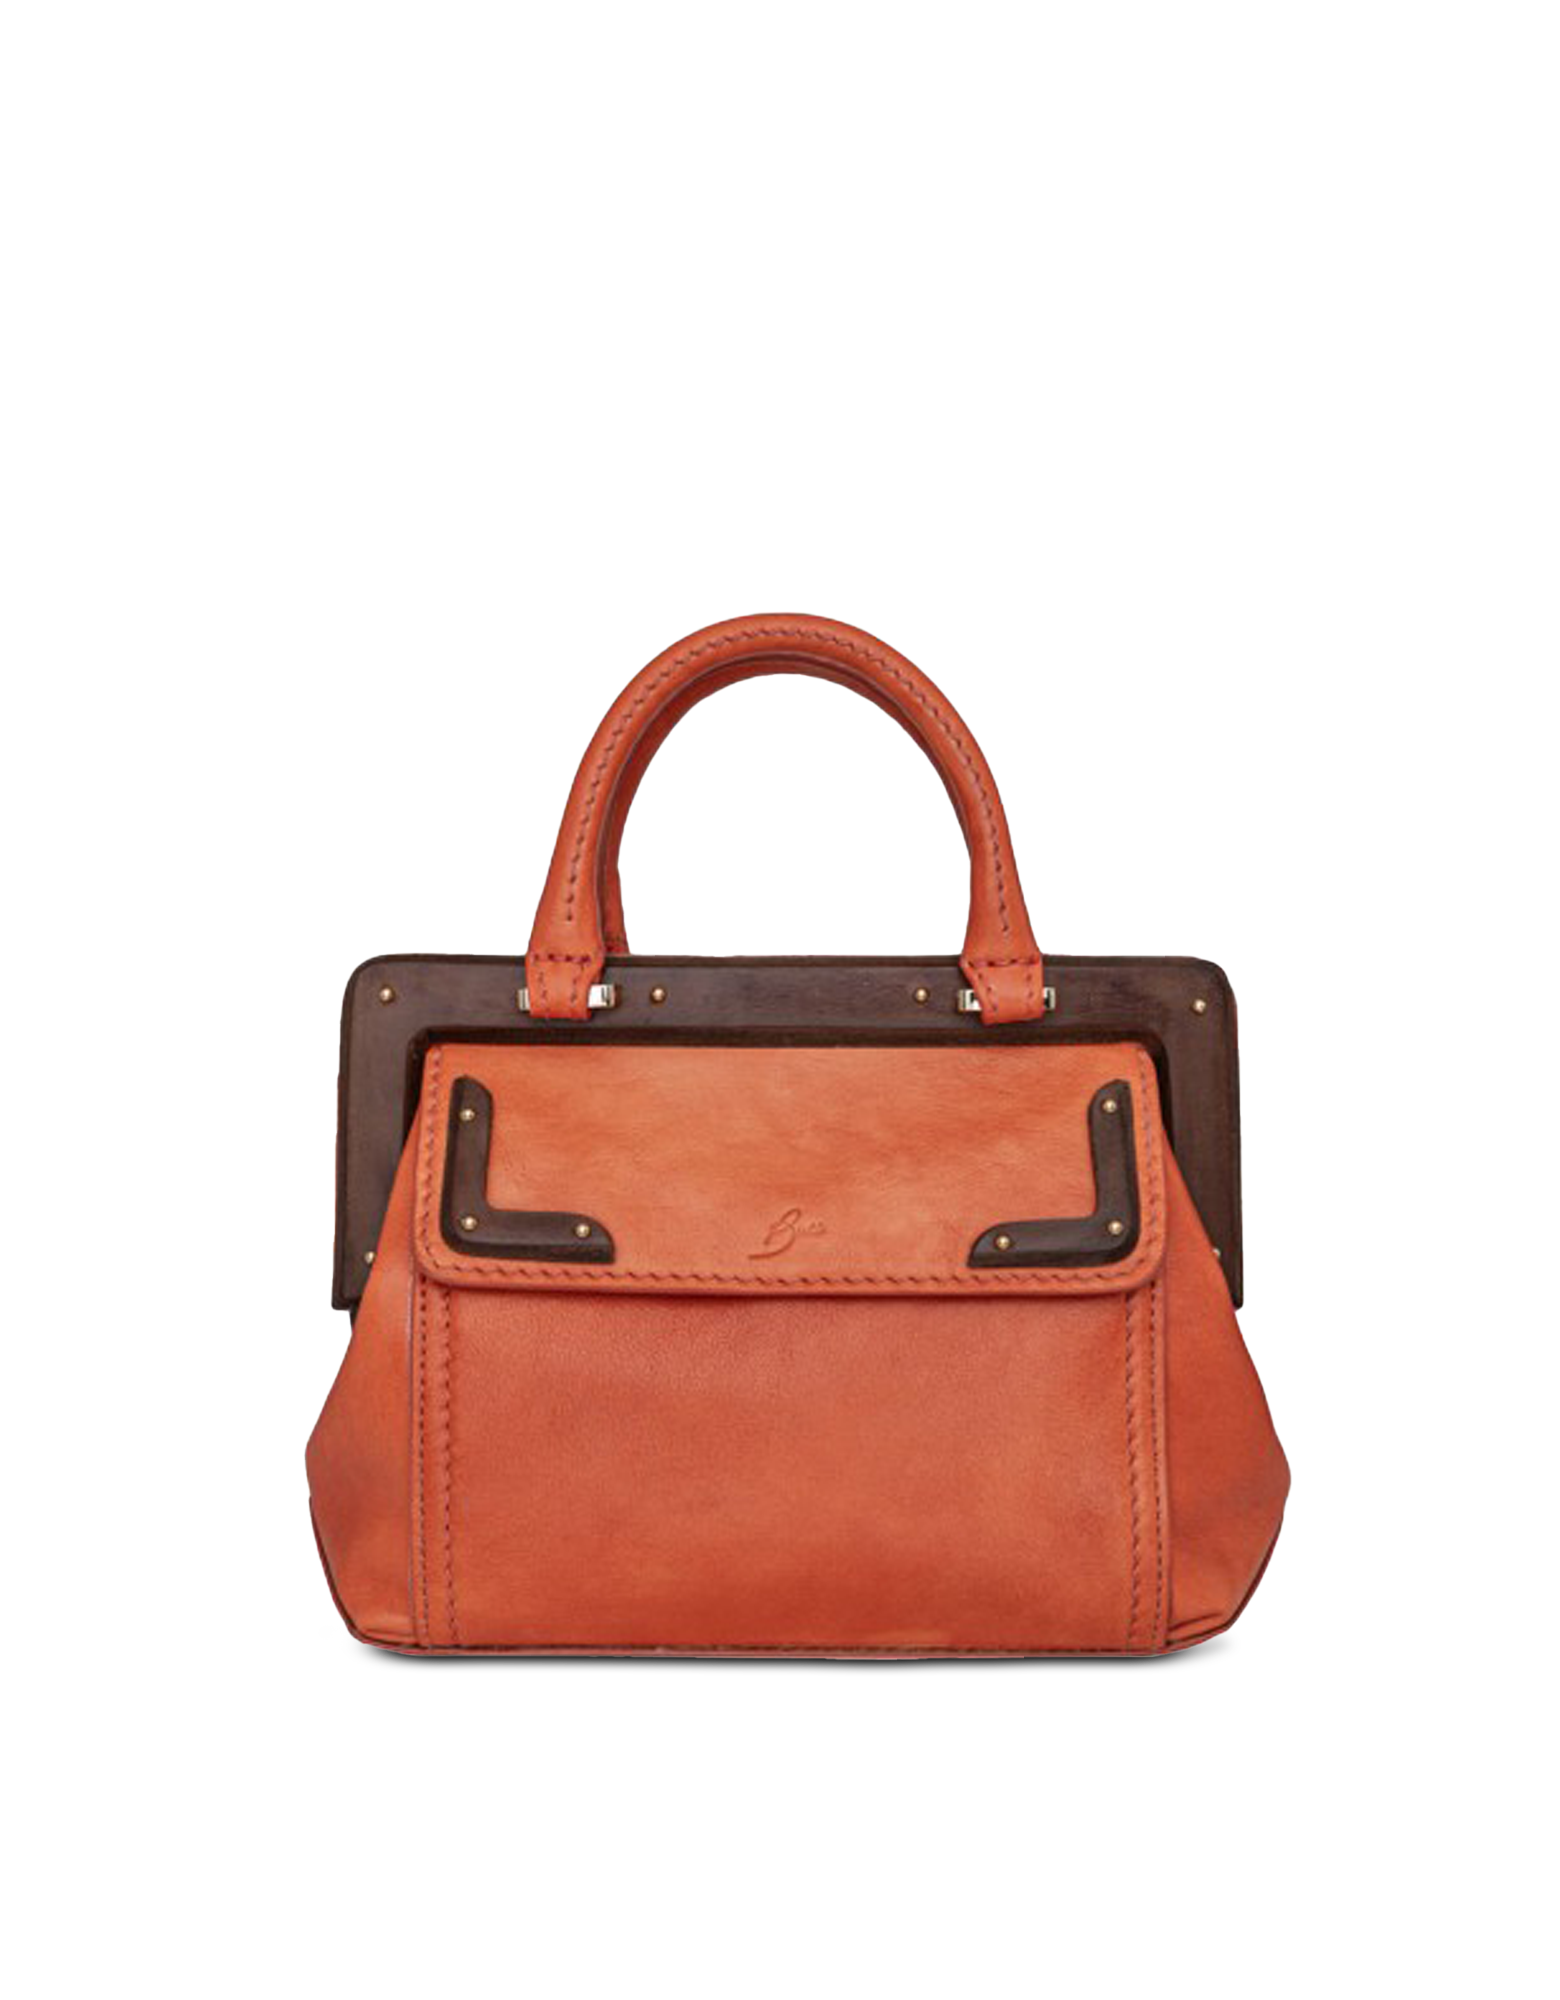 Buti 1630 Orange Leather Small Top Handle Satchel Bag